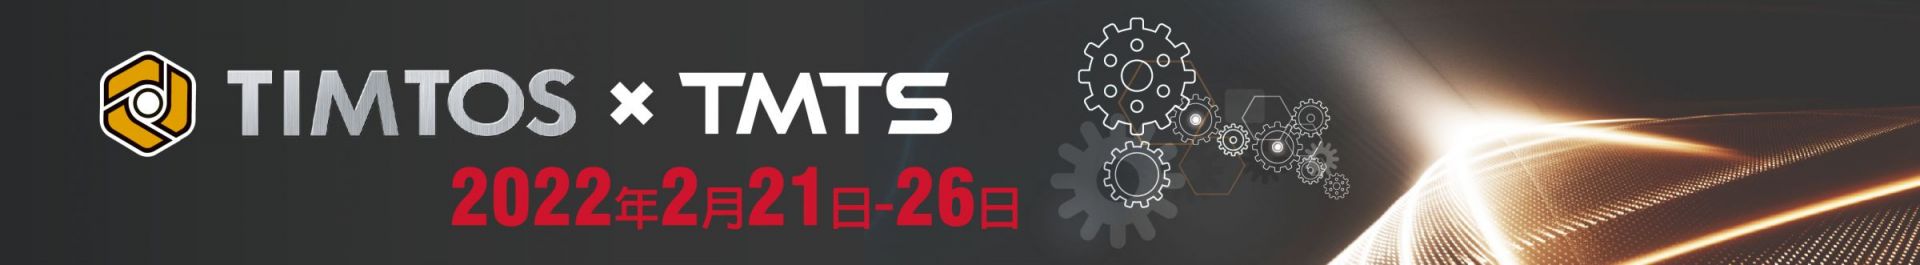 TIMTOS x TMTS 2022 Тайбэйская международная выставка станков